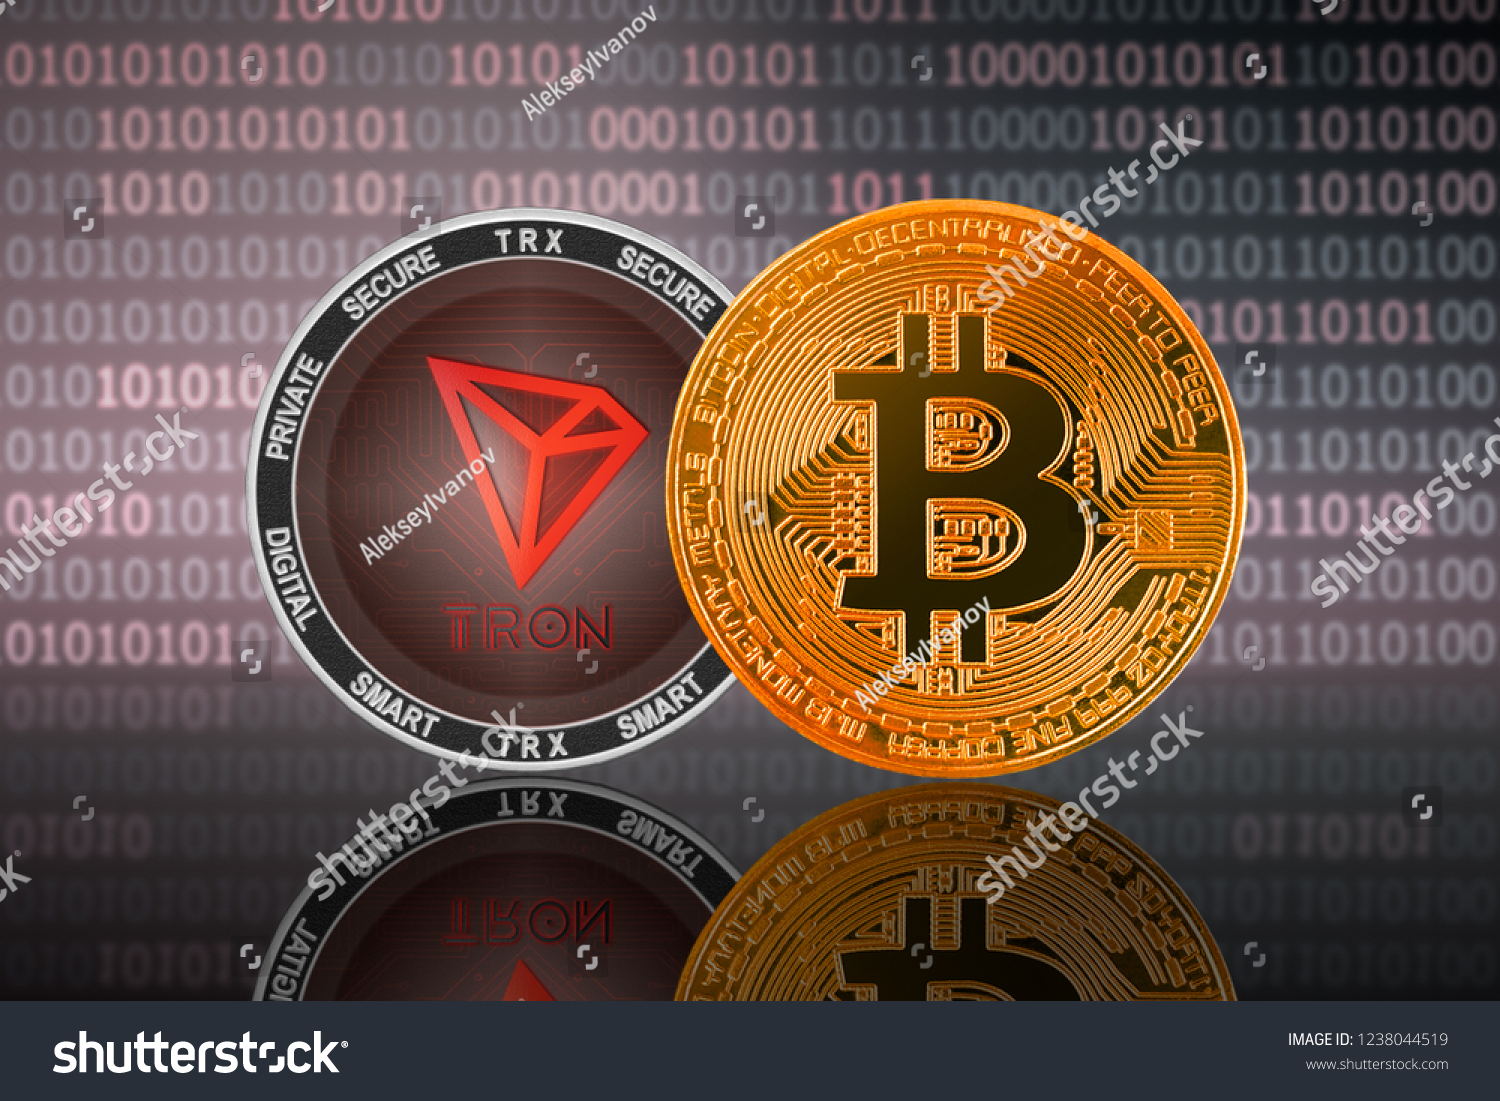 Buy trx with btc blockchain bitcoin wallet address